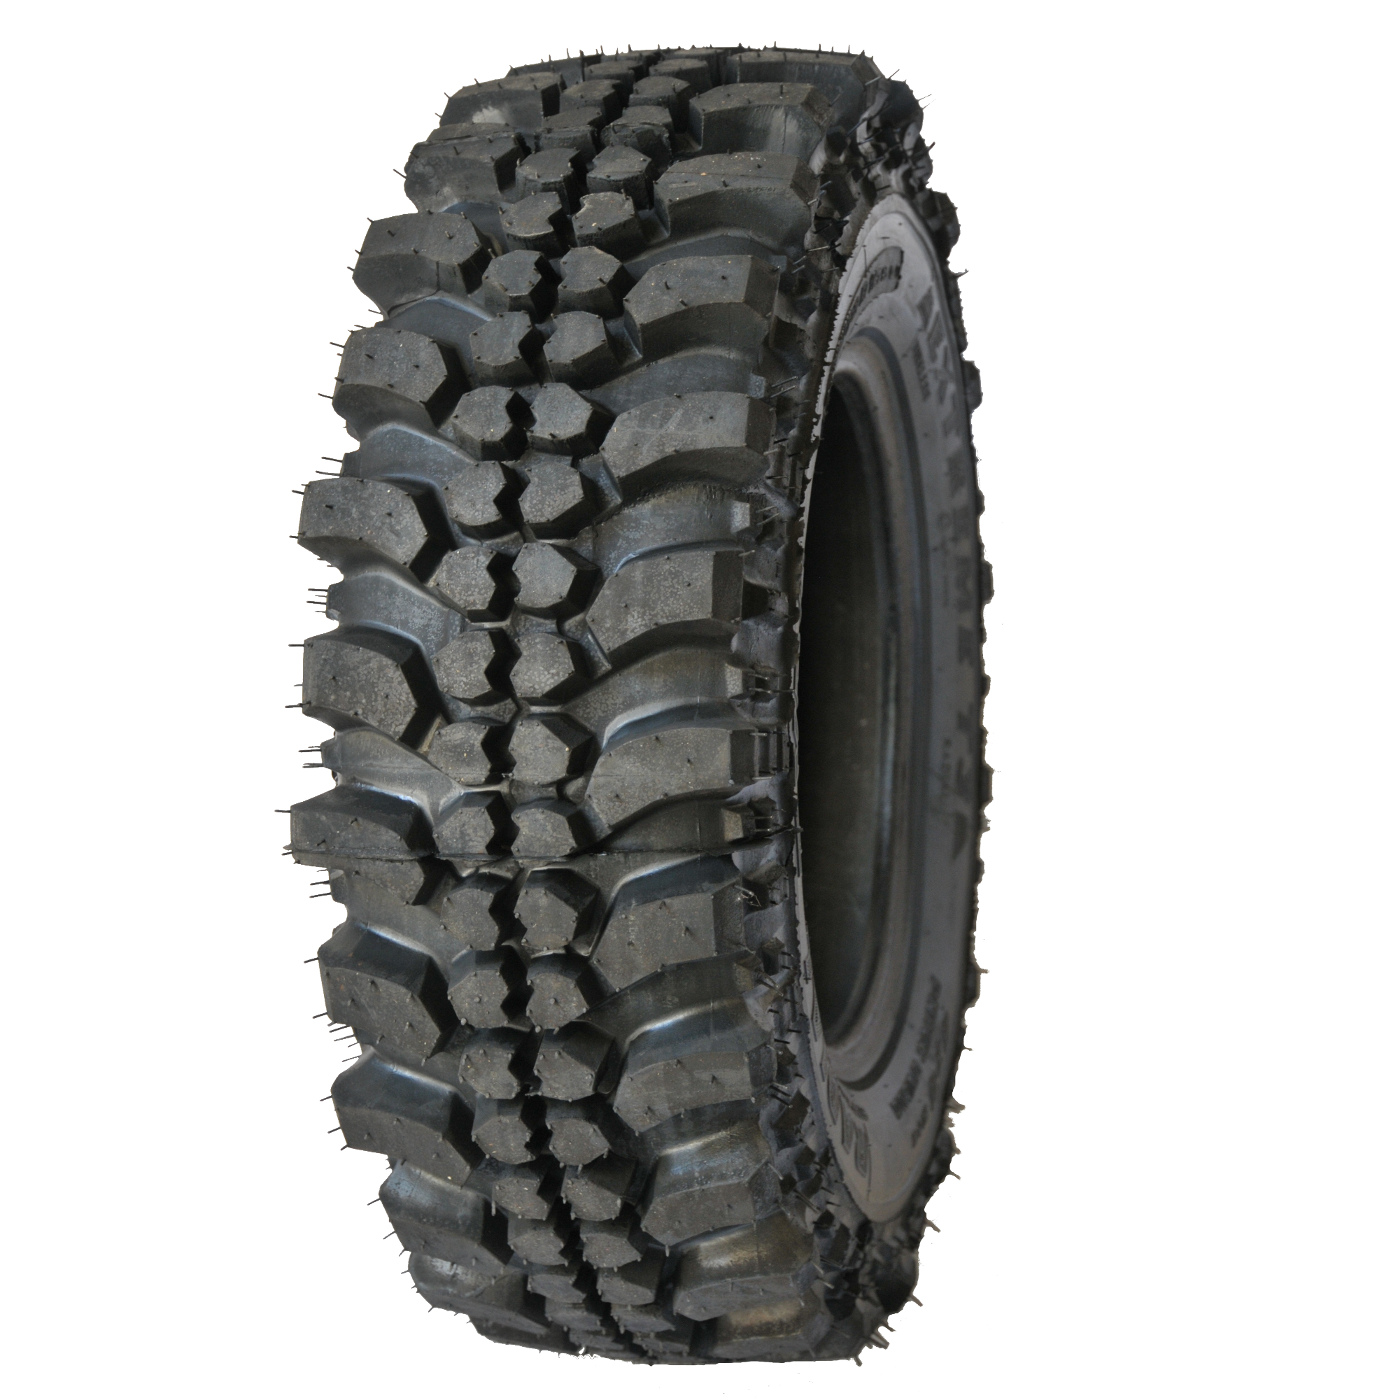 Off-road tire Extreme T3 225/65 R17 Italian company Pneus Ovada